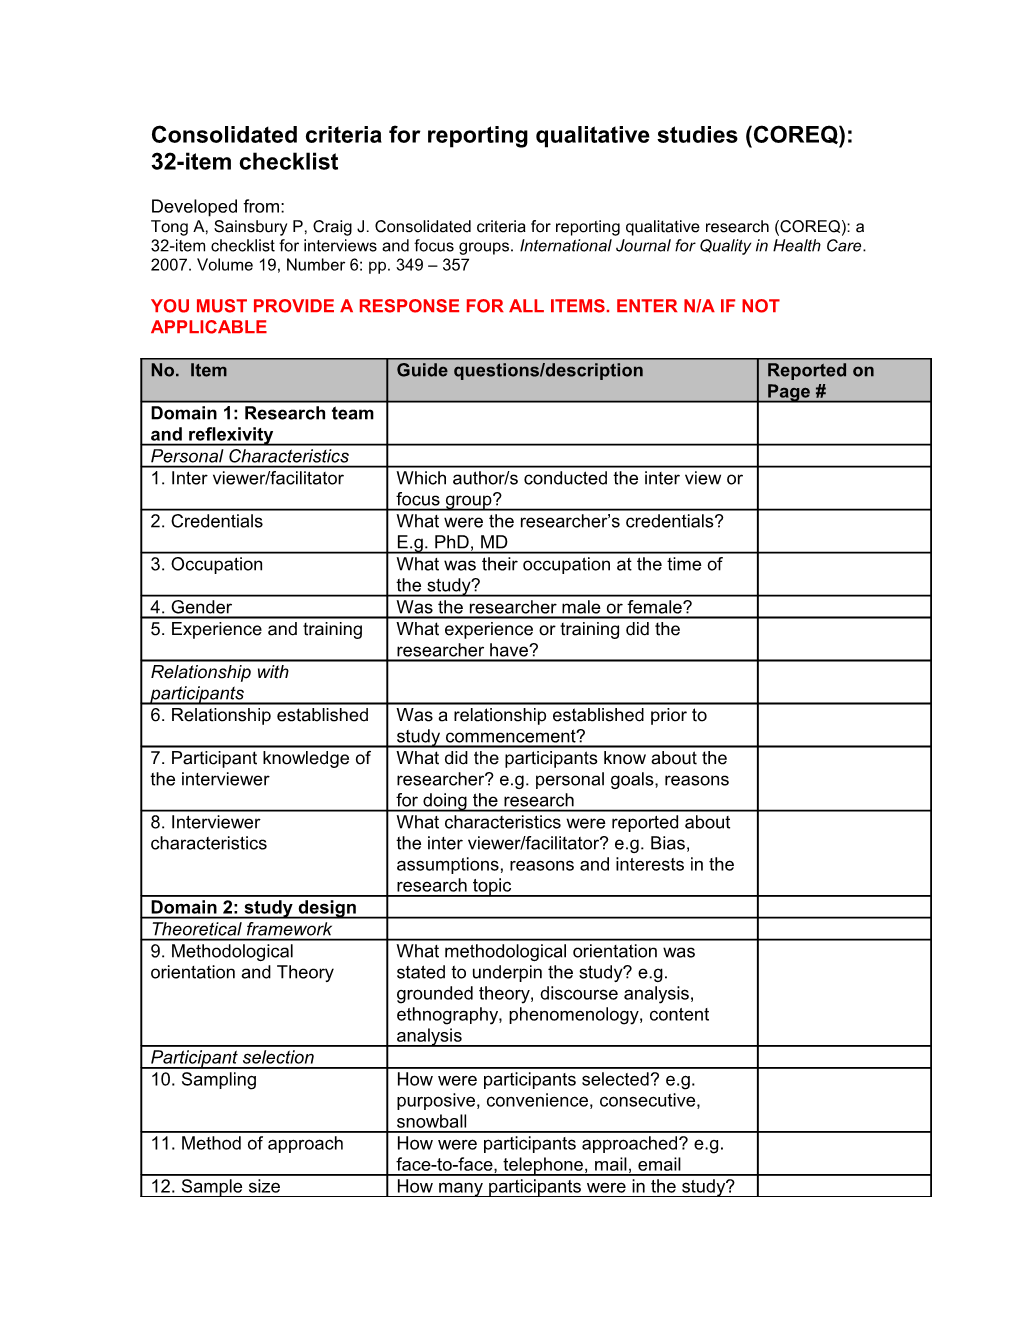 Consolidated Criteria for Reporting Qualitative Studies (COREQ): 32-Item Checklist